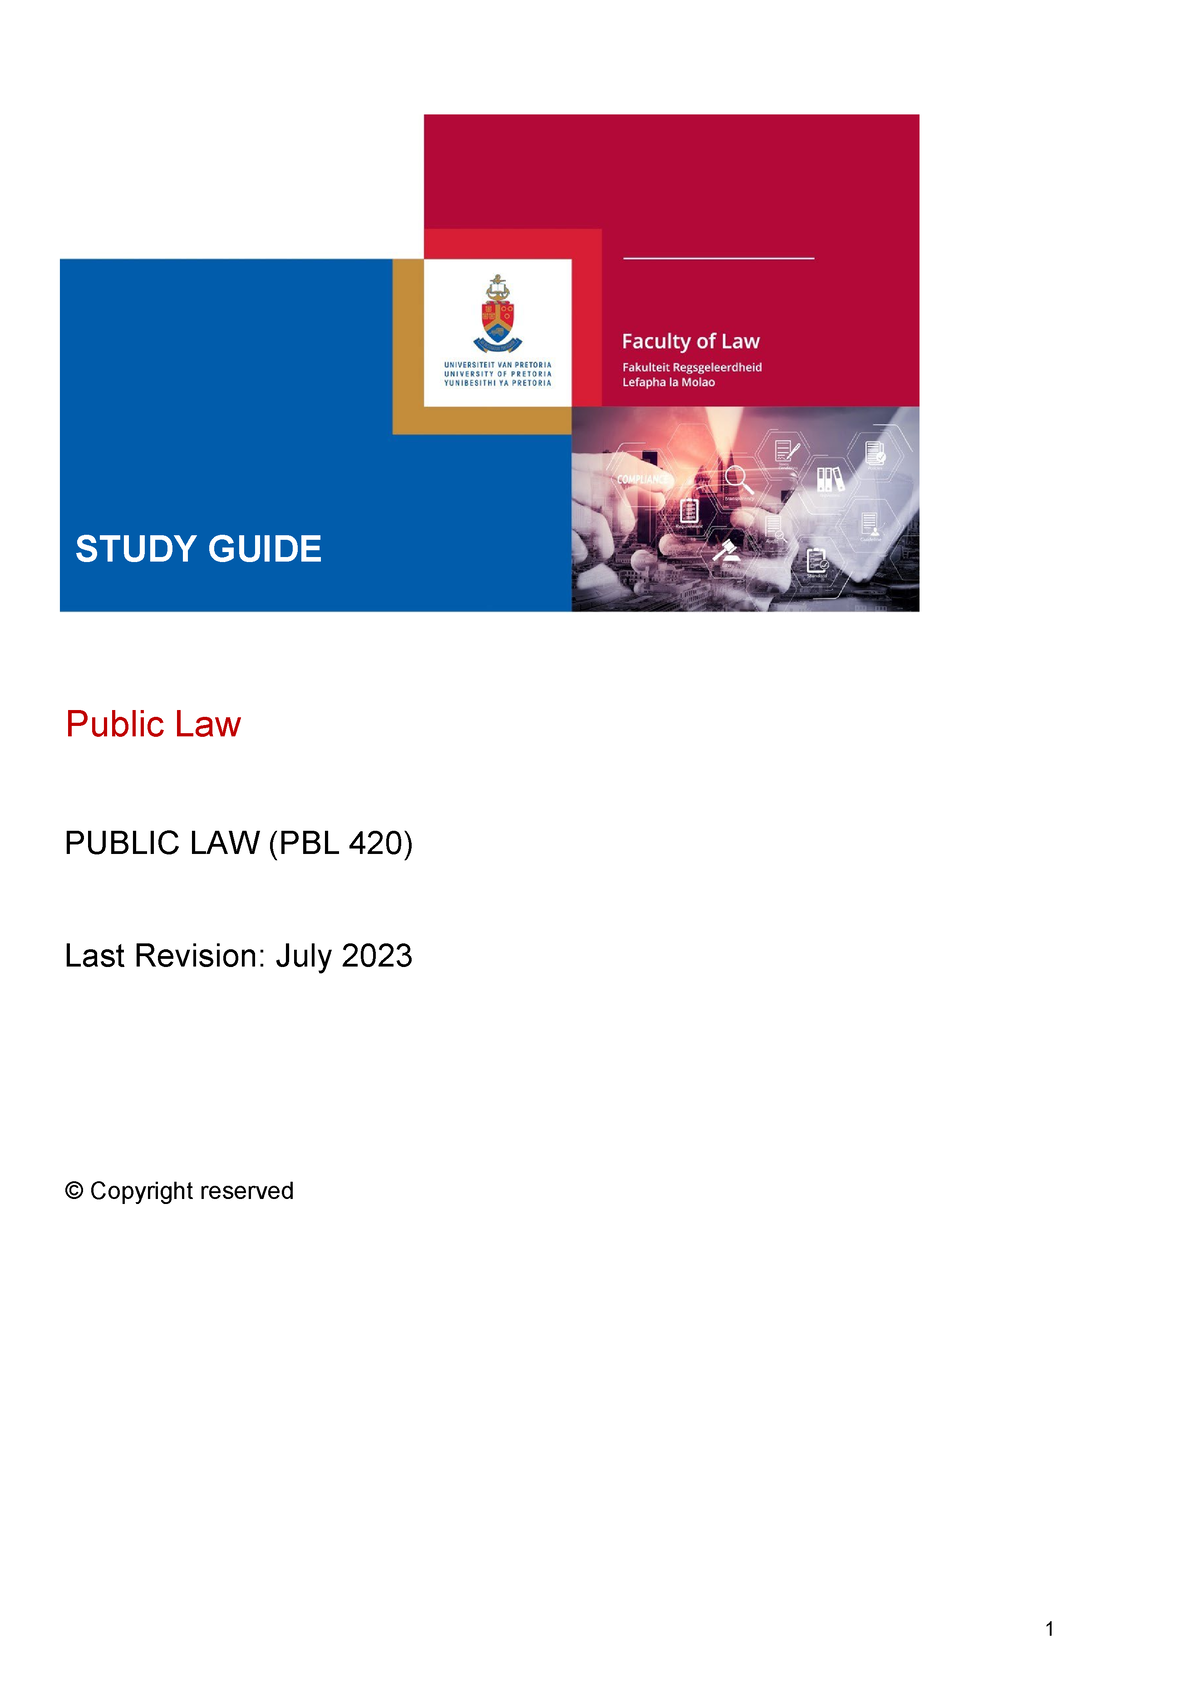 case study on public law